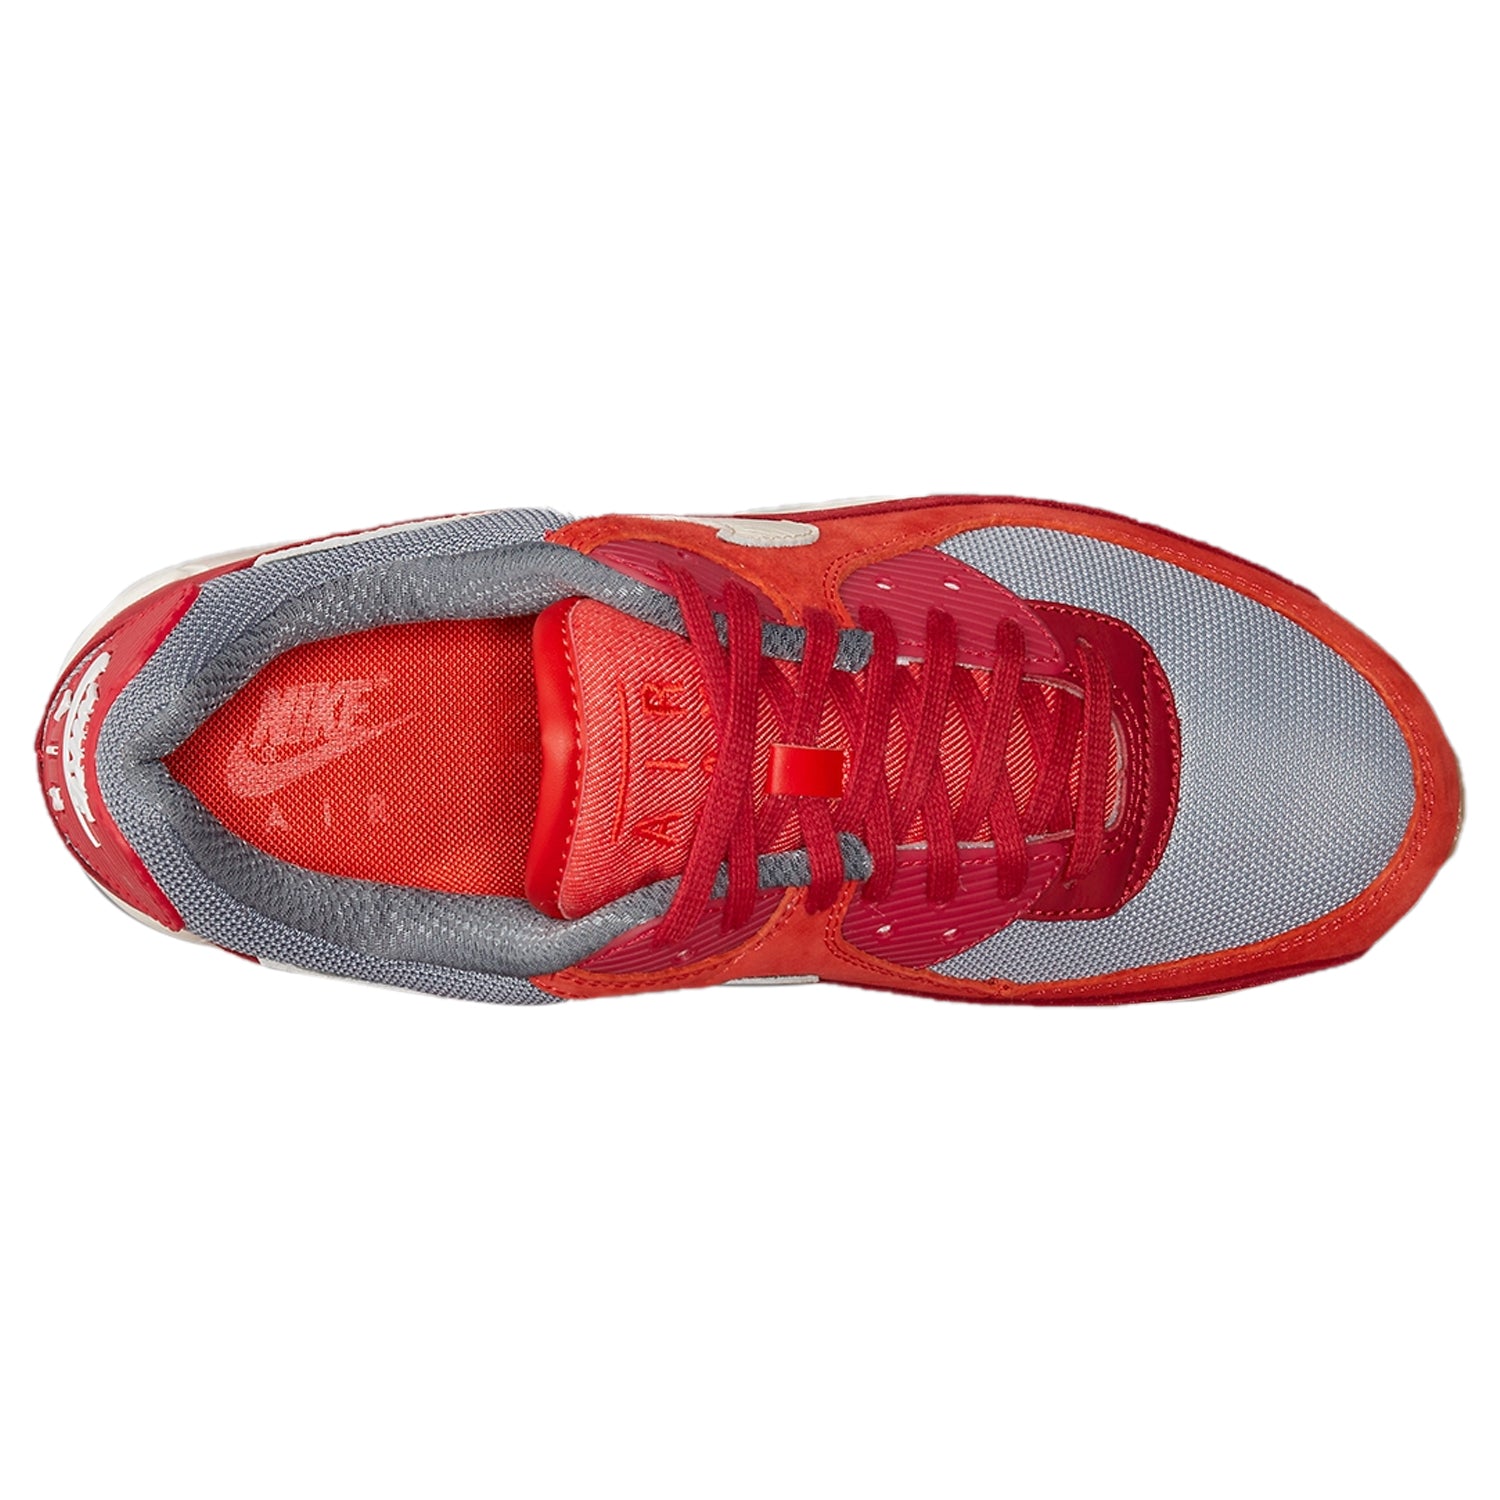 Nike Air Max 90 Premium Gym Red Smoke Grey Gum